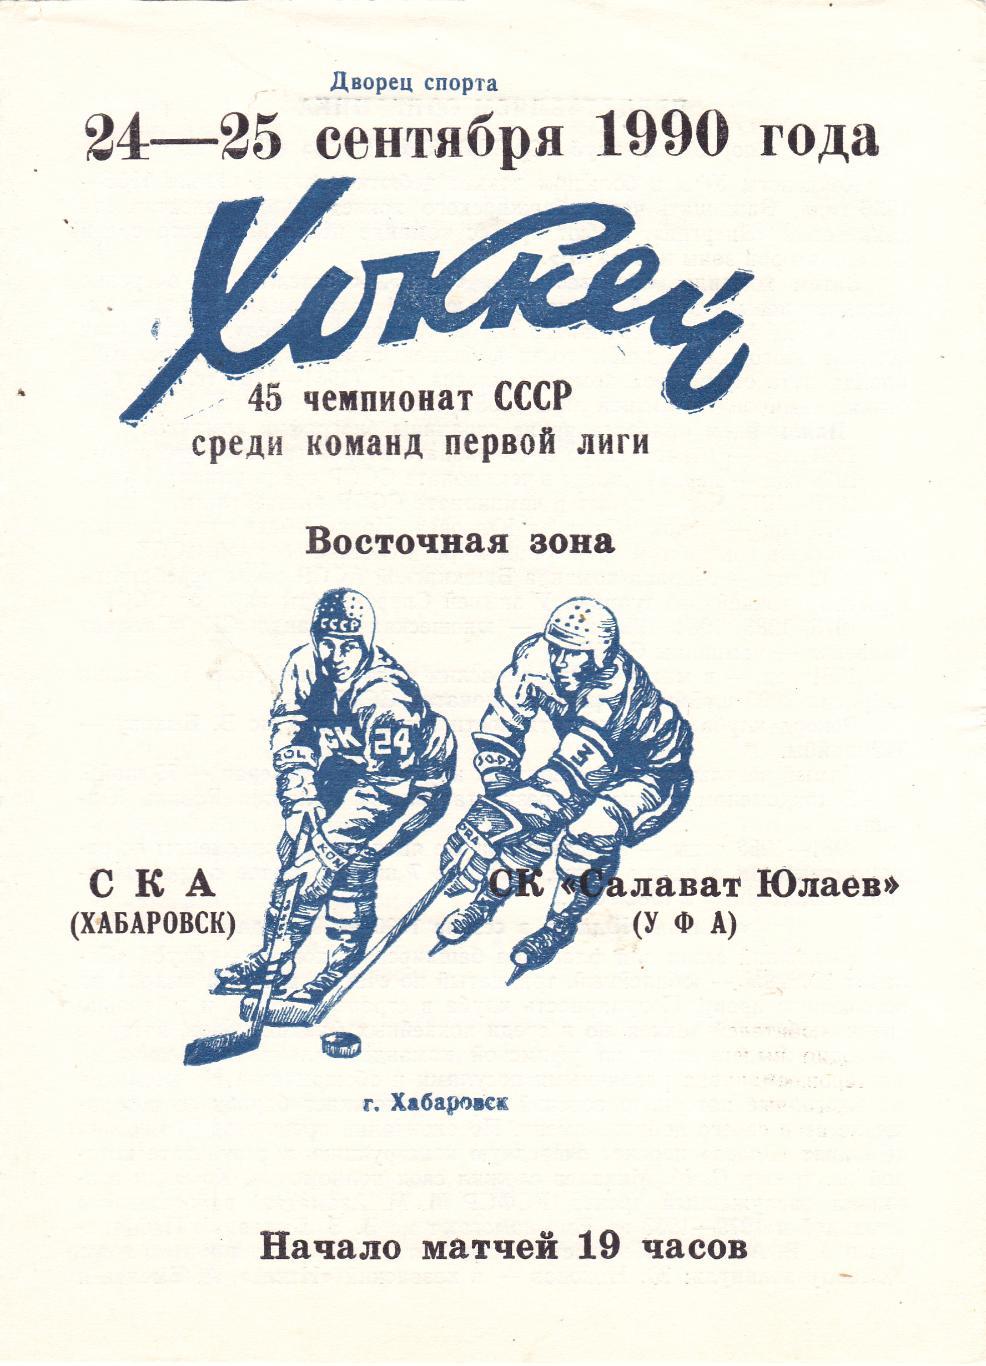 СКА (Хабаровск) - Салават Юлаев (Уфа) 24-25.09.1990